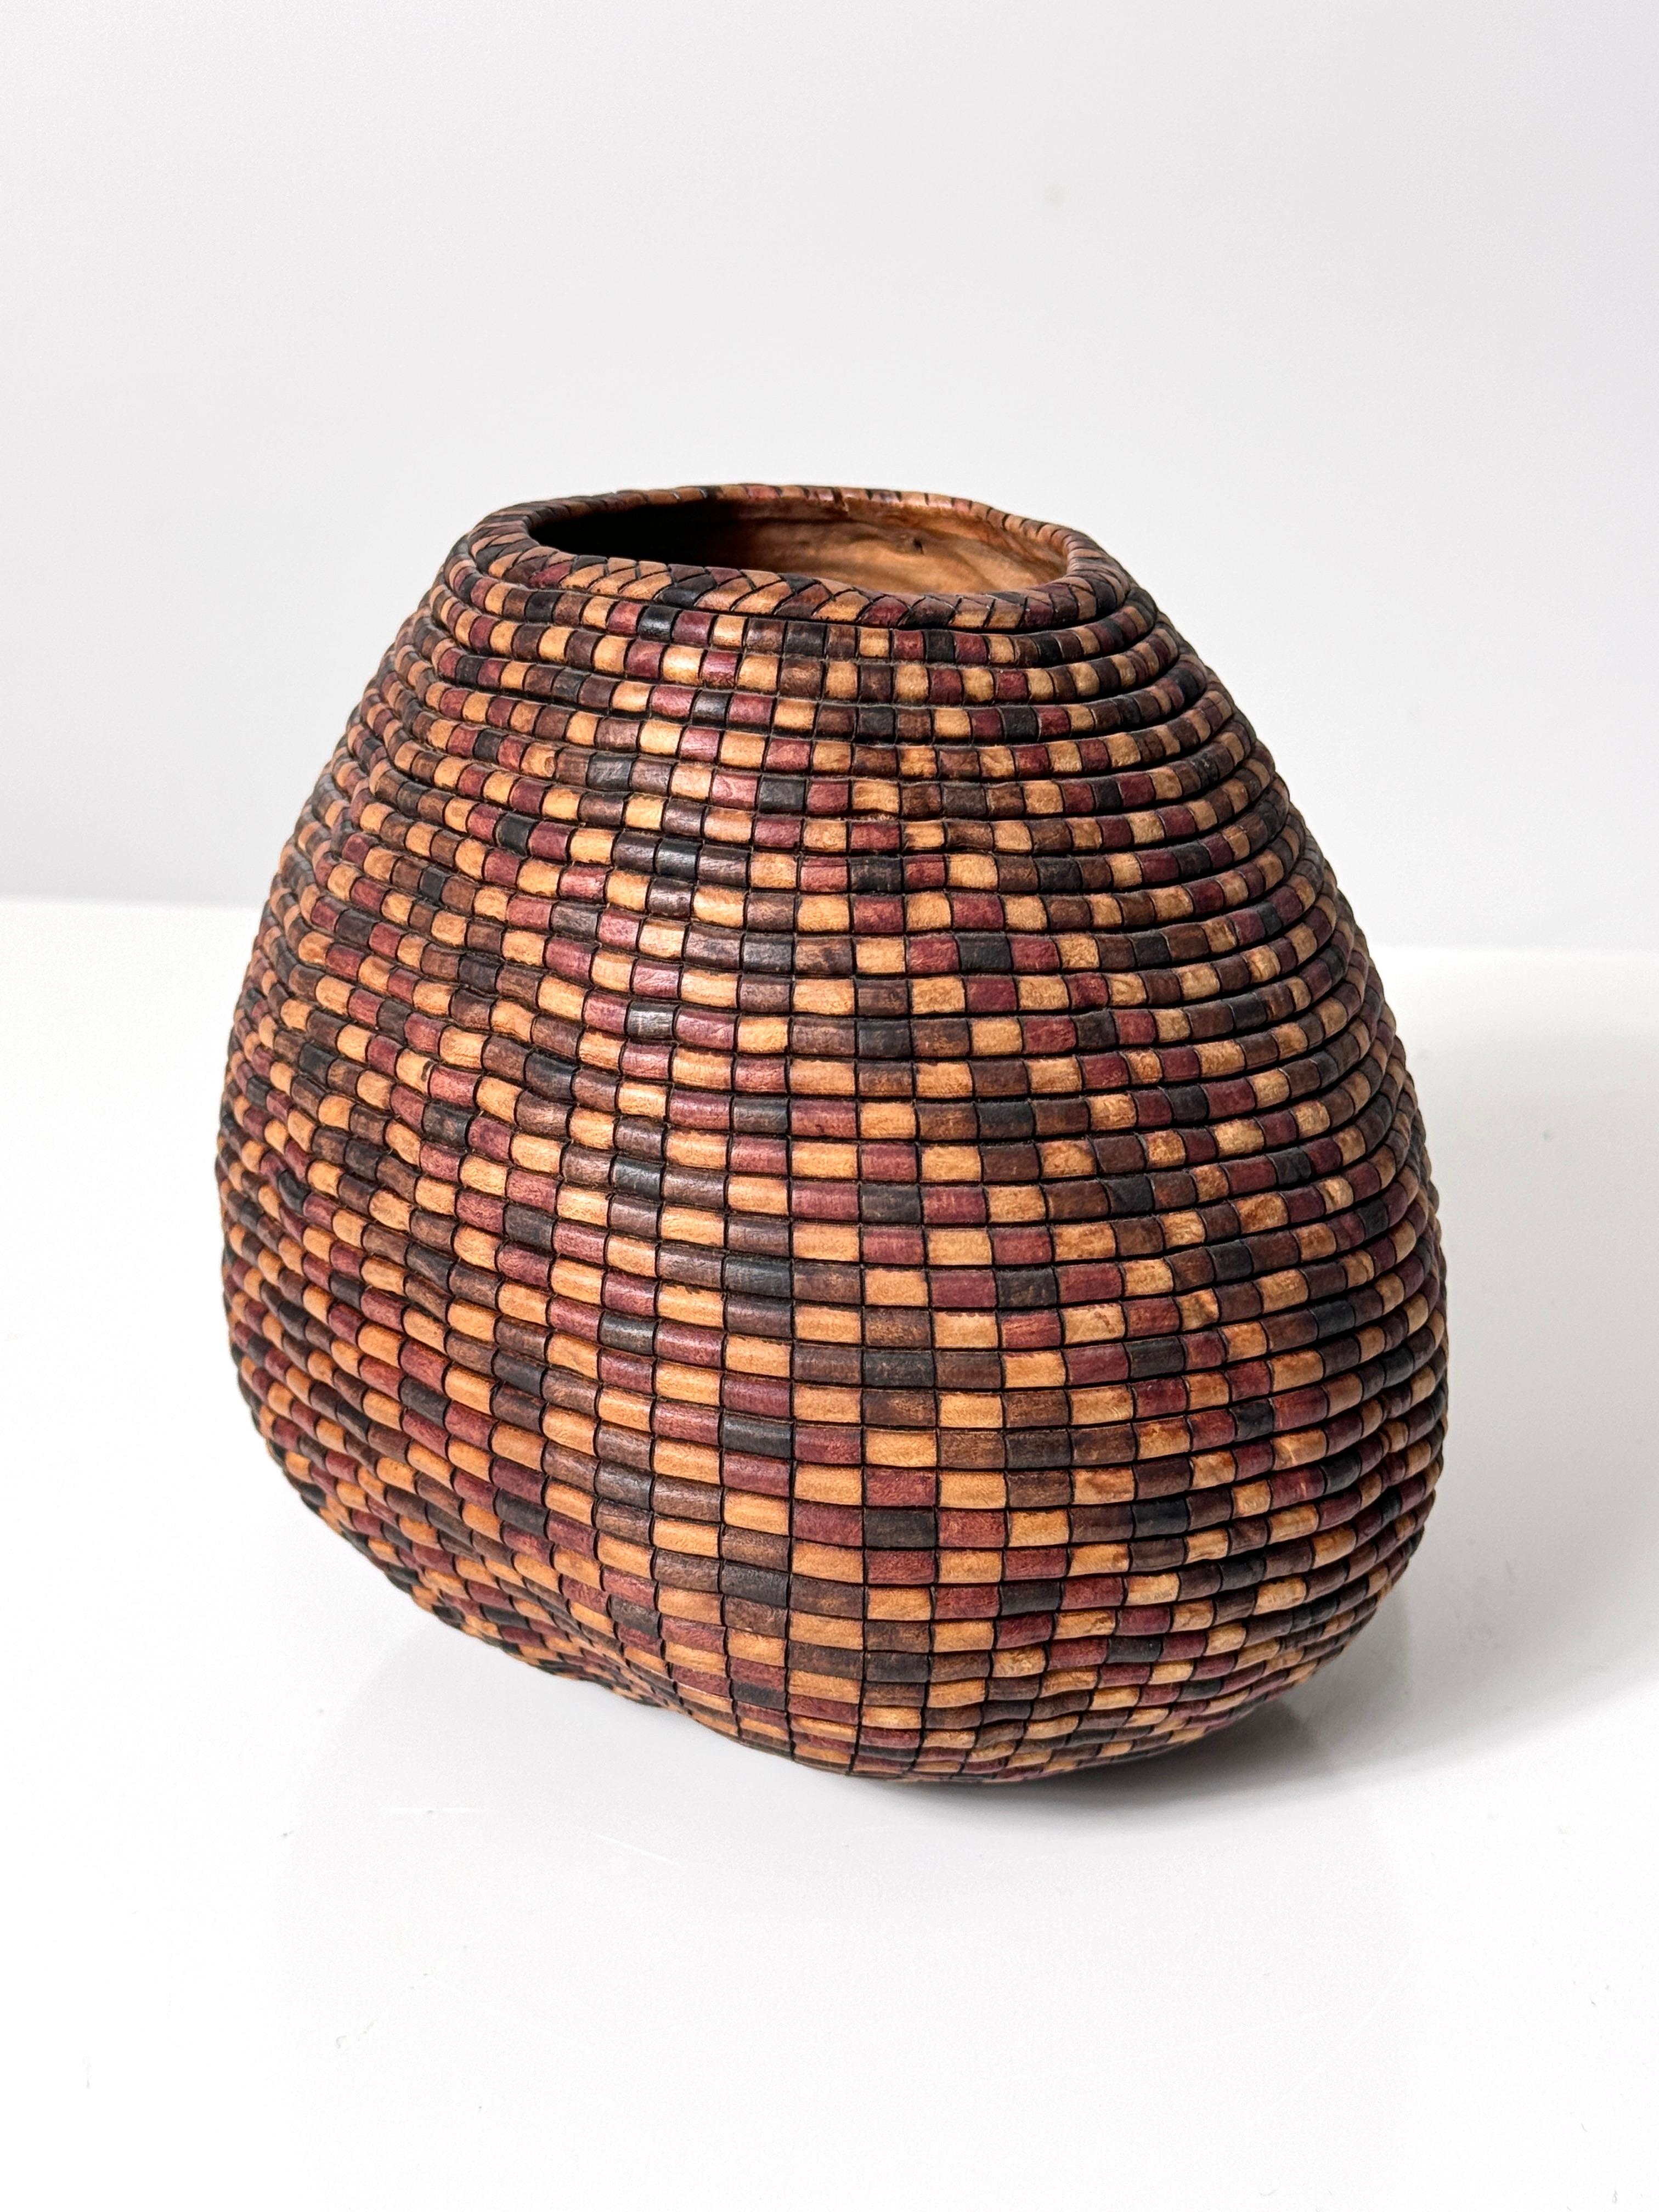 North American American Studio Turned Wood Basket Illusion Vessel Bowl by David Nittmann 1990s For Sale